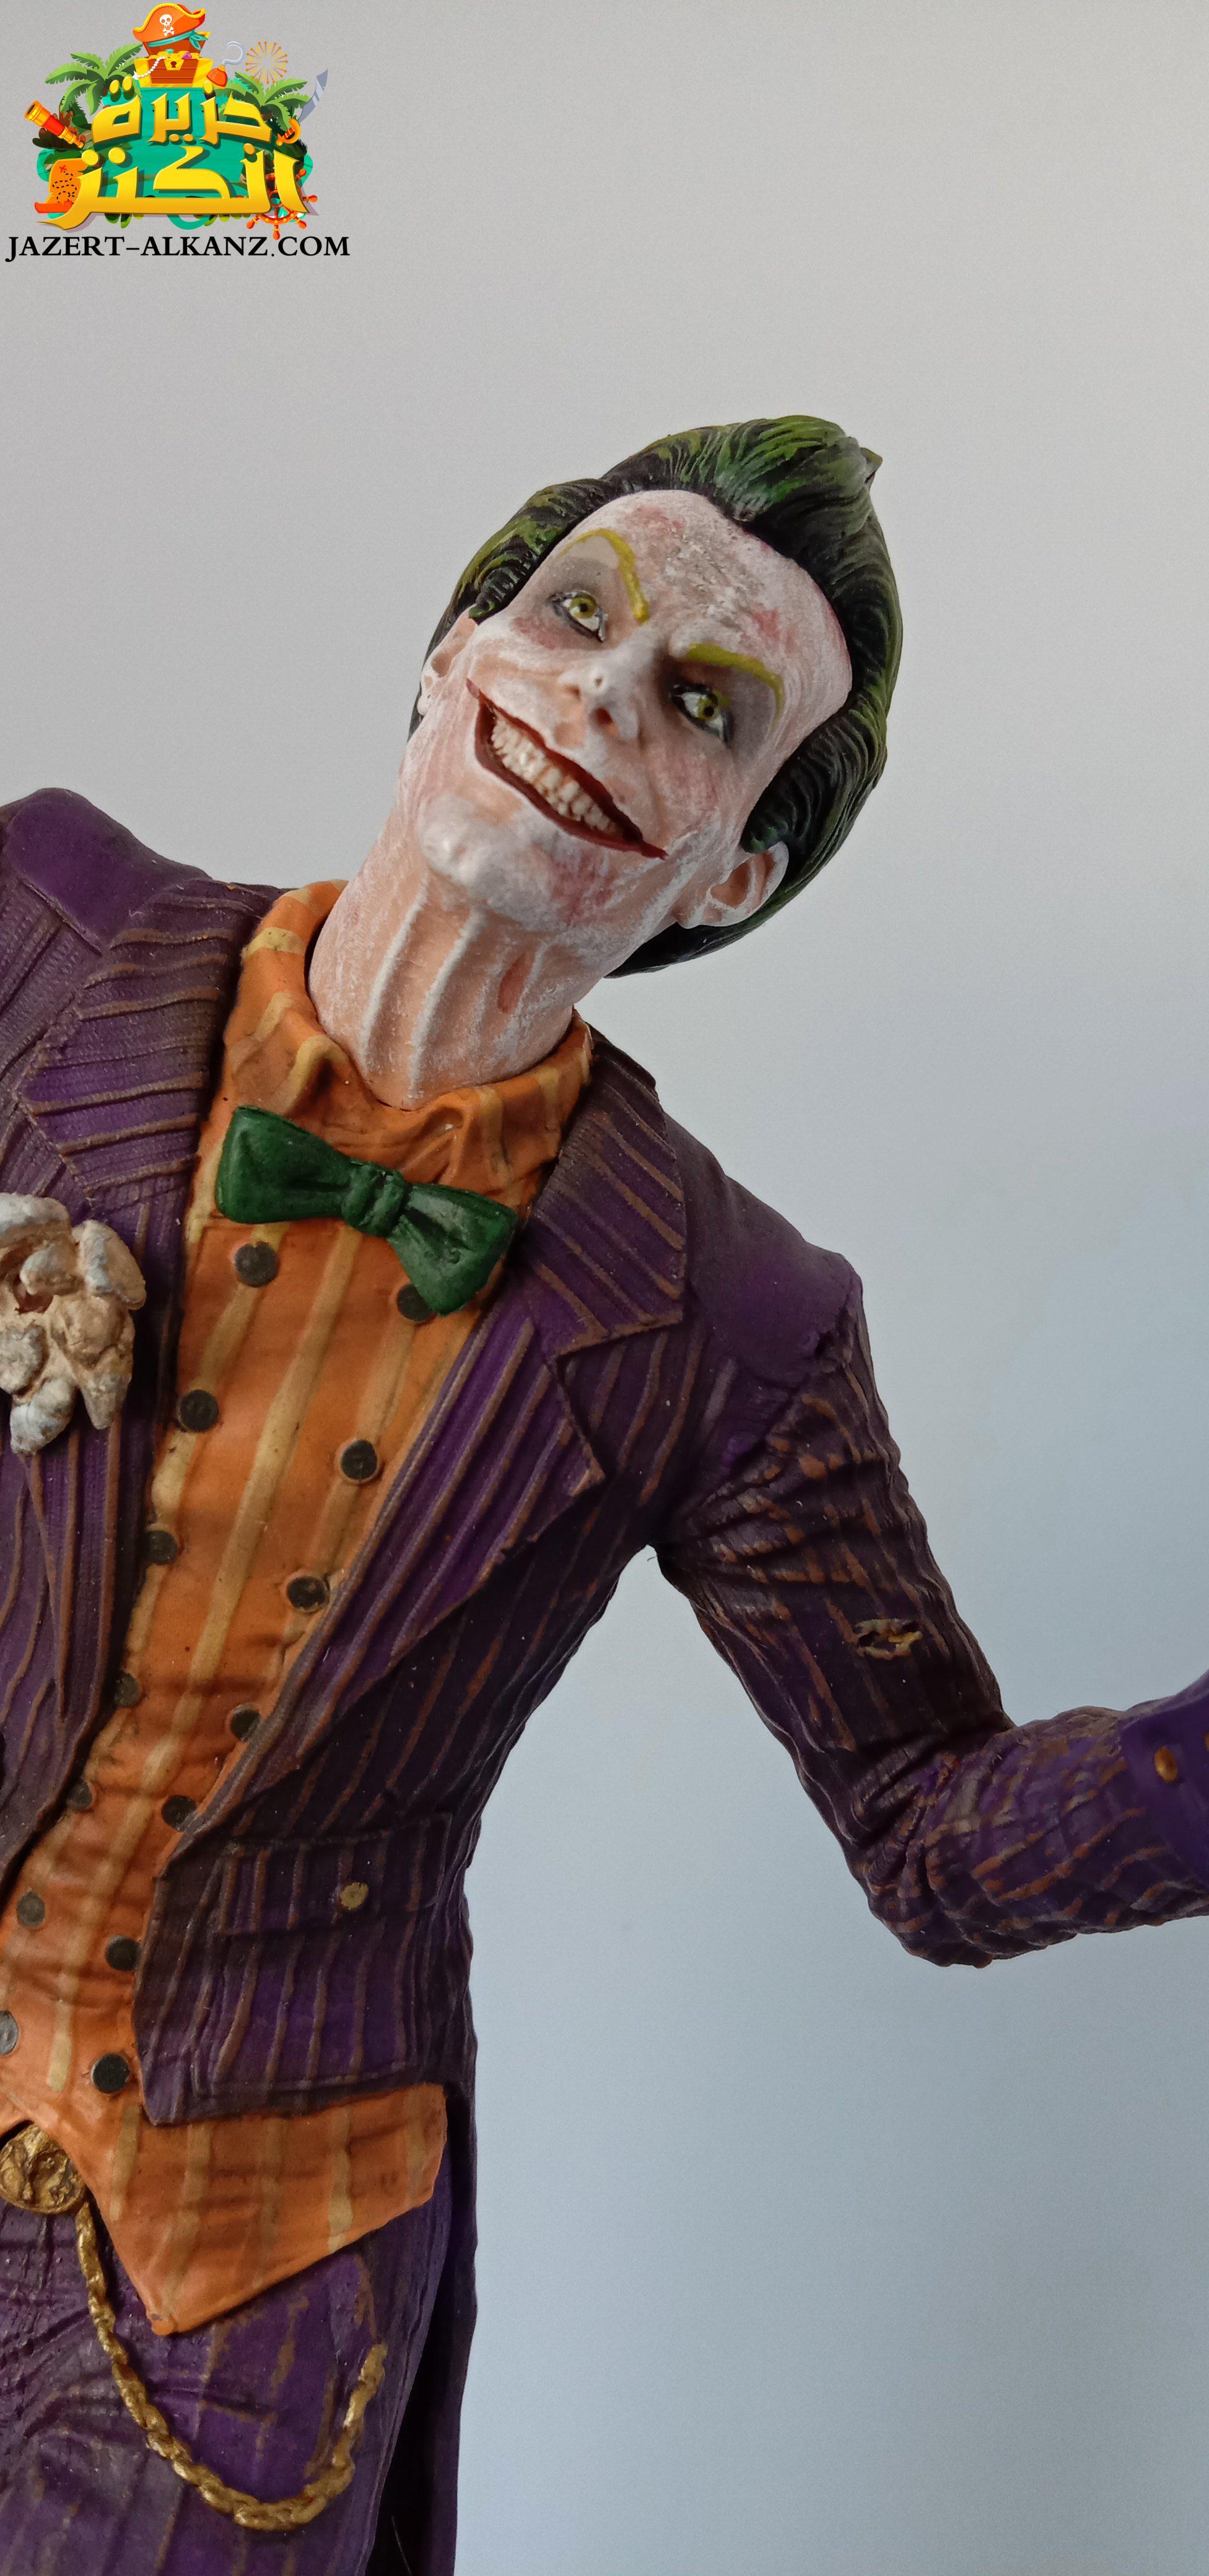 The Joker Figures Characters مجسم الجوكر جوكر.